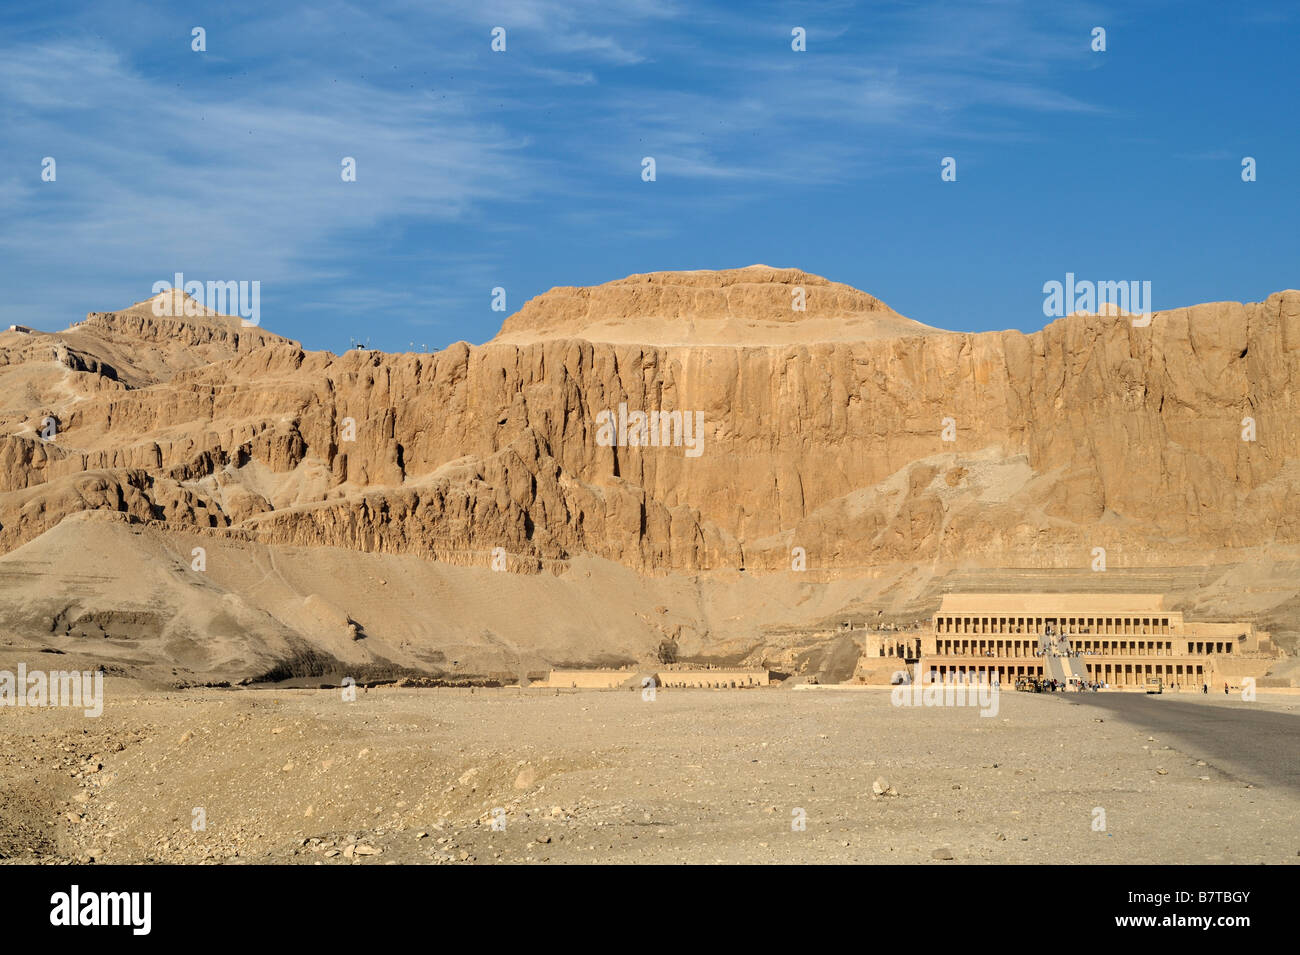 Deir el-Bahari, Luxor, Egypt 081118 32941 Stock Photo